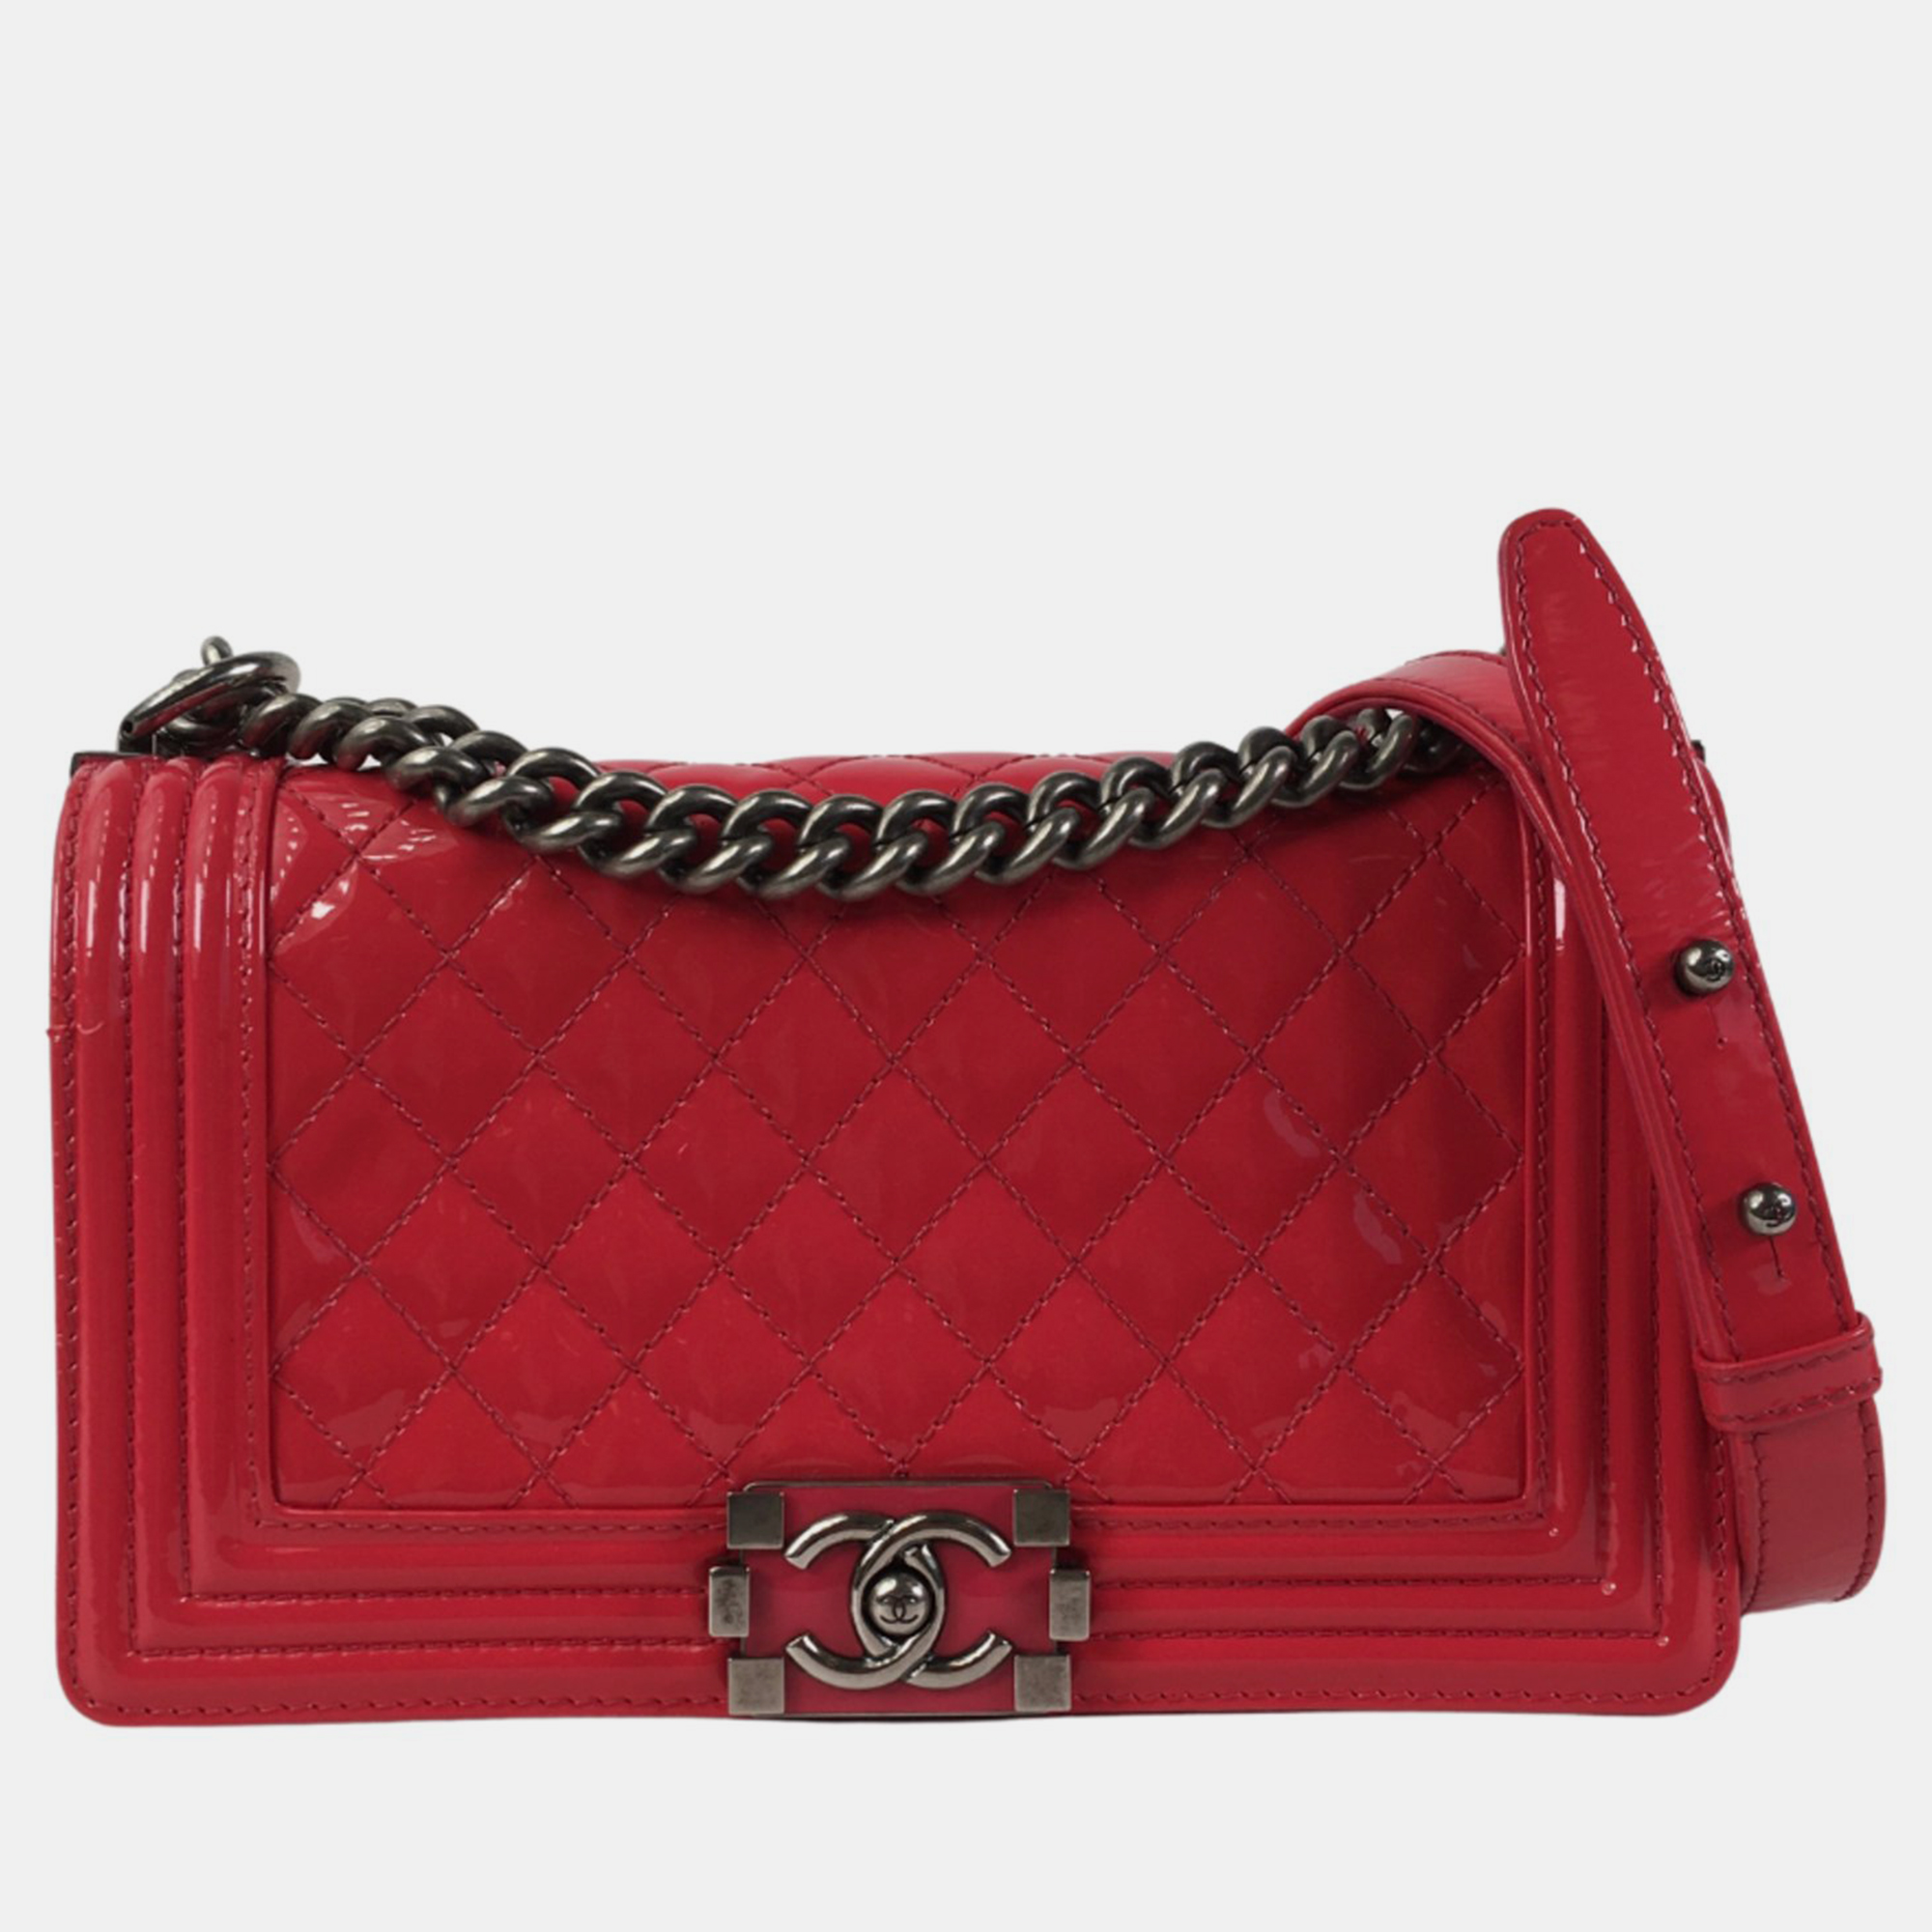 Chanel pink patent leather medium boy bag